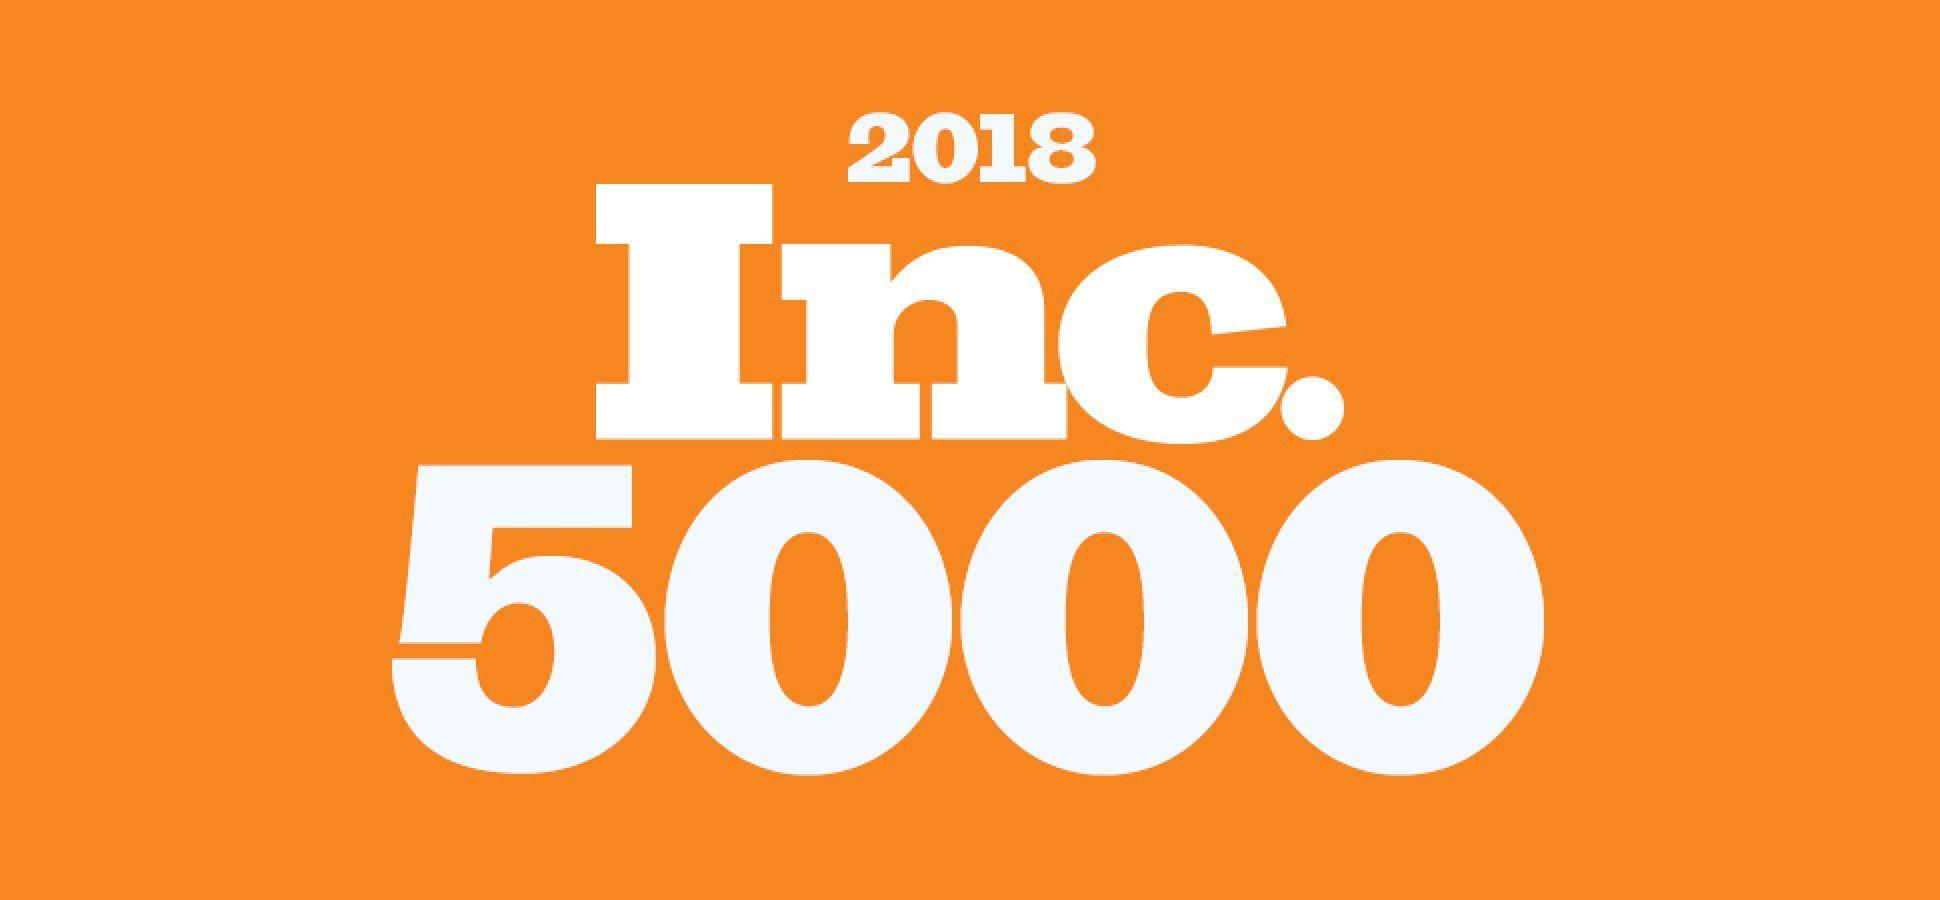 Inc. Logo - Inc. 5000 2018: The Complete Rankings | Inc.com